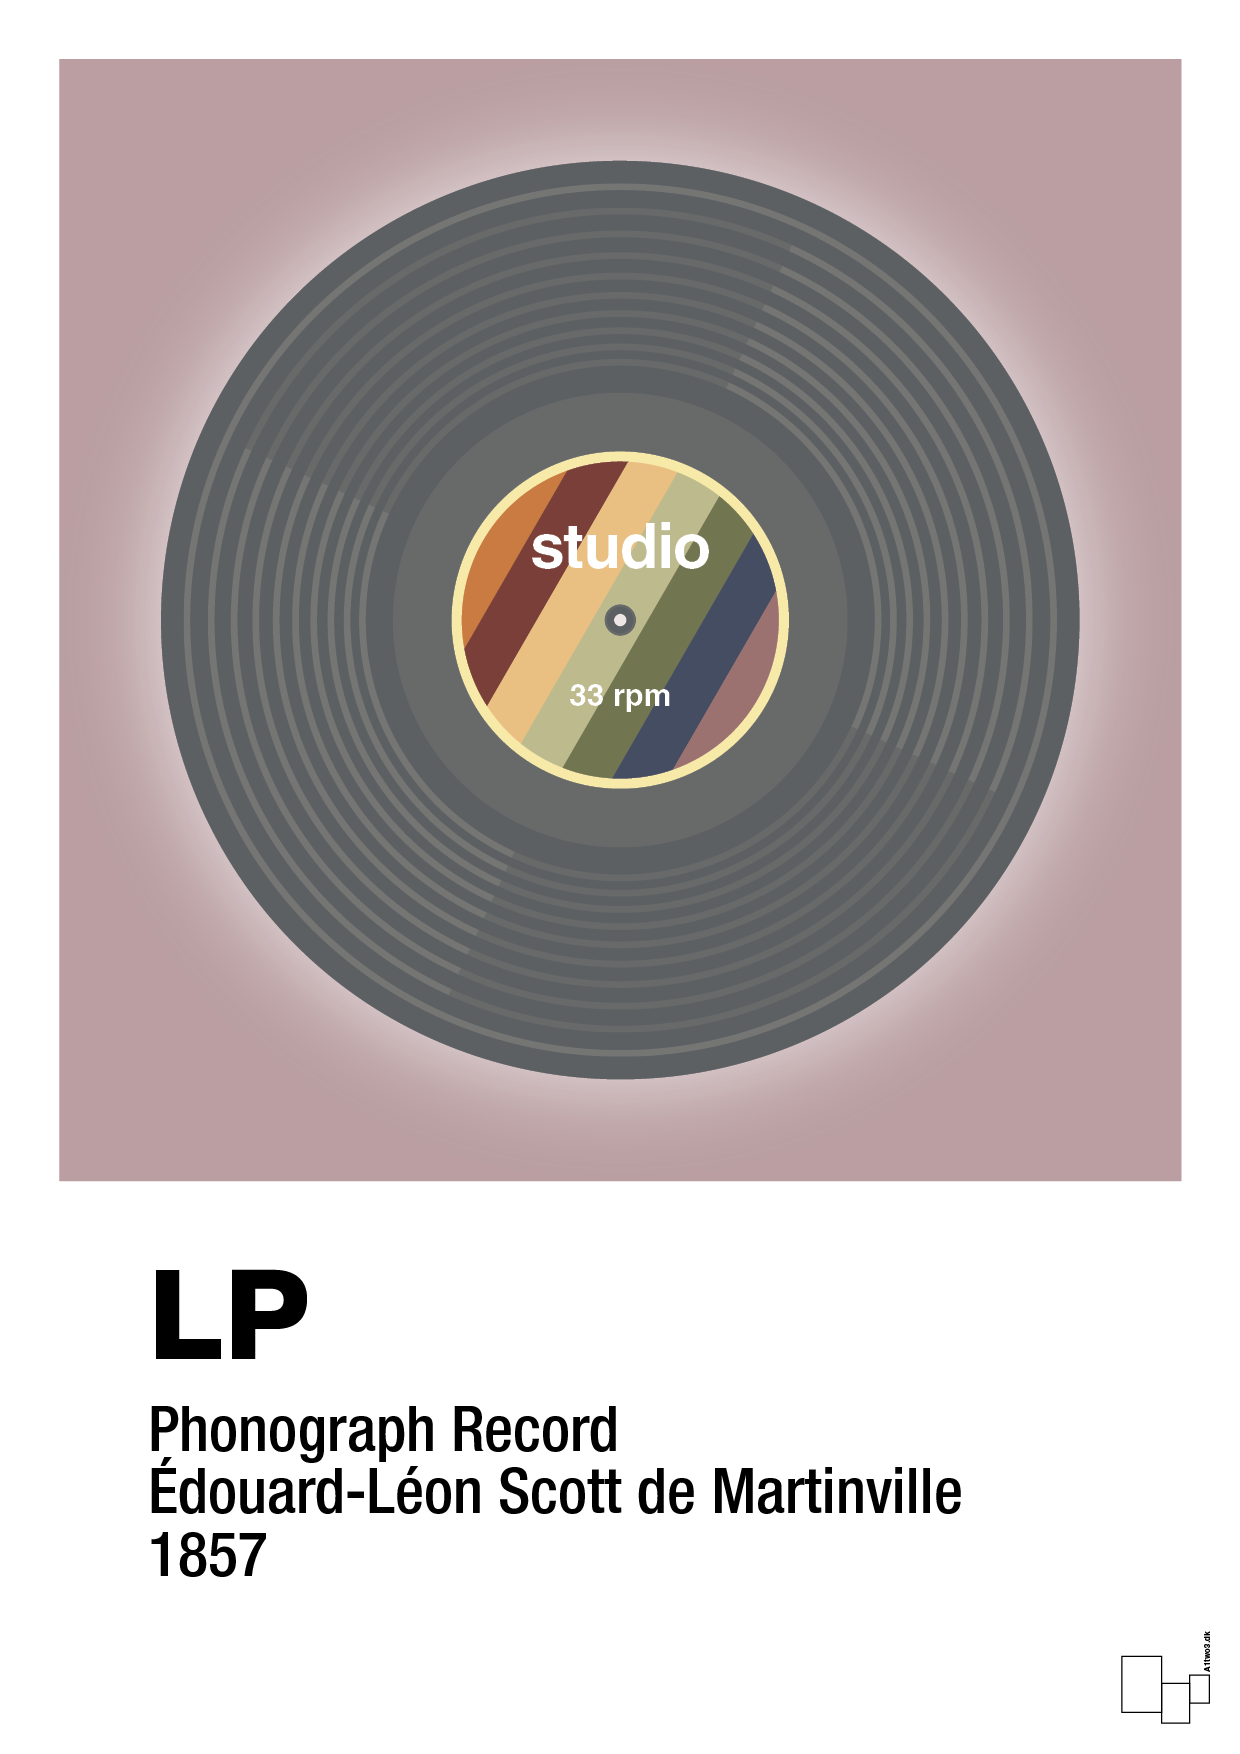 vinylplade 33rpm - Plakat med Grafik i Light Rose